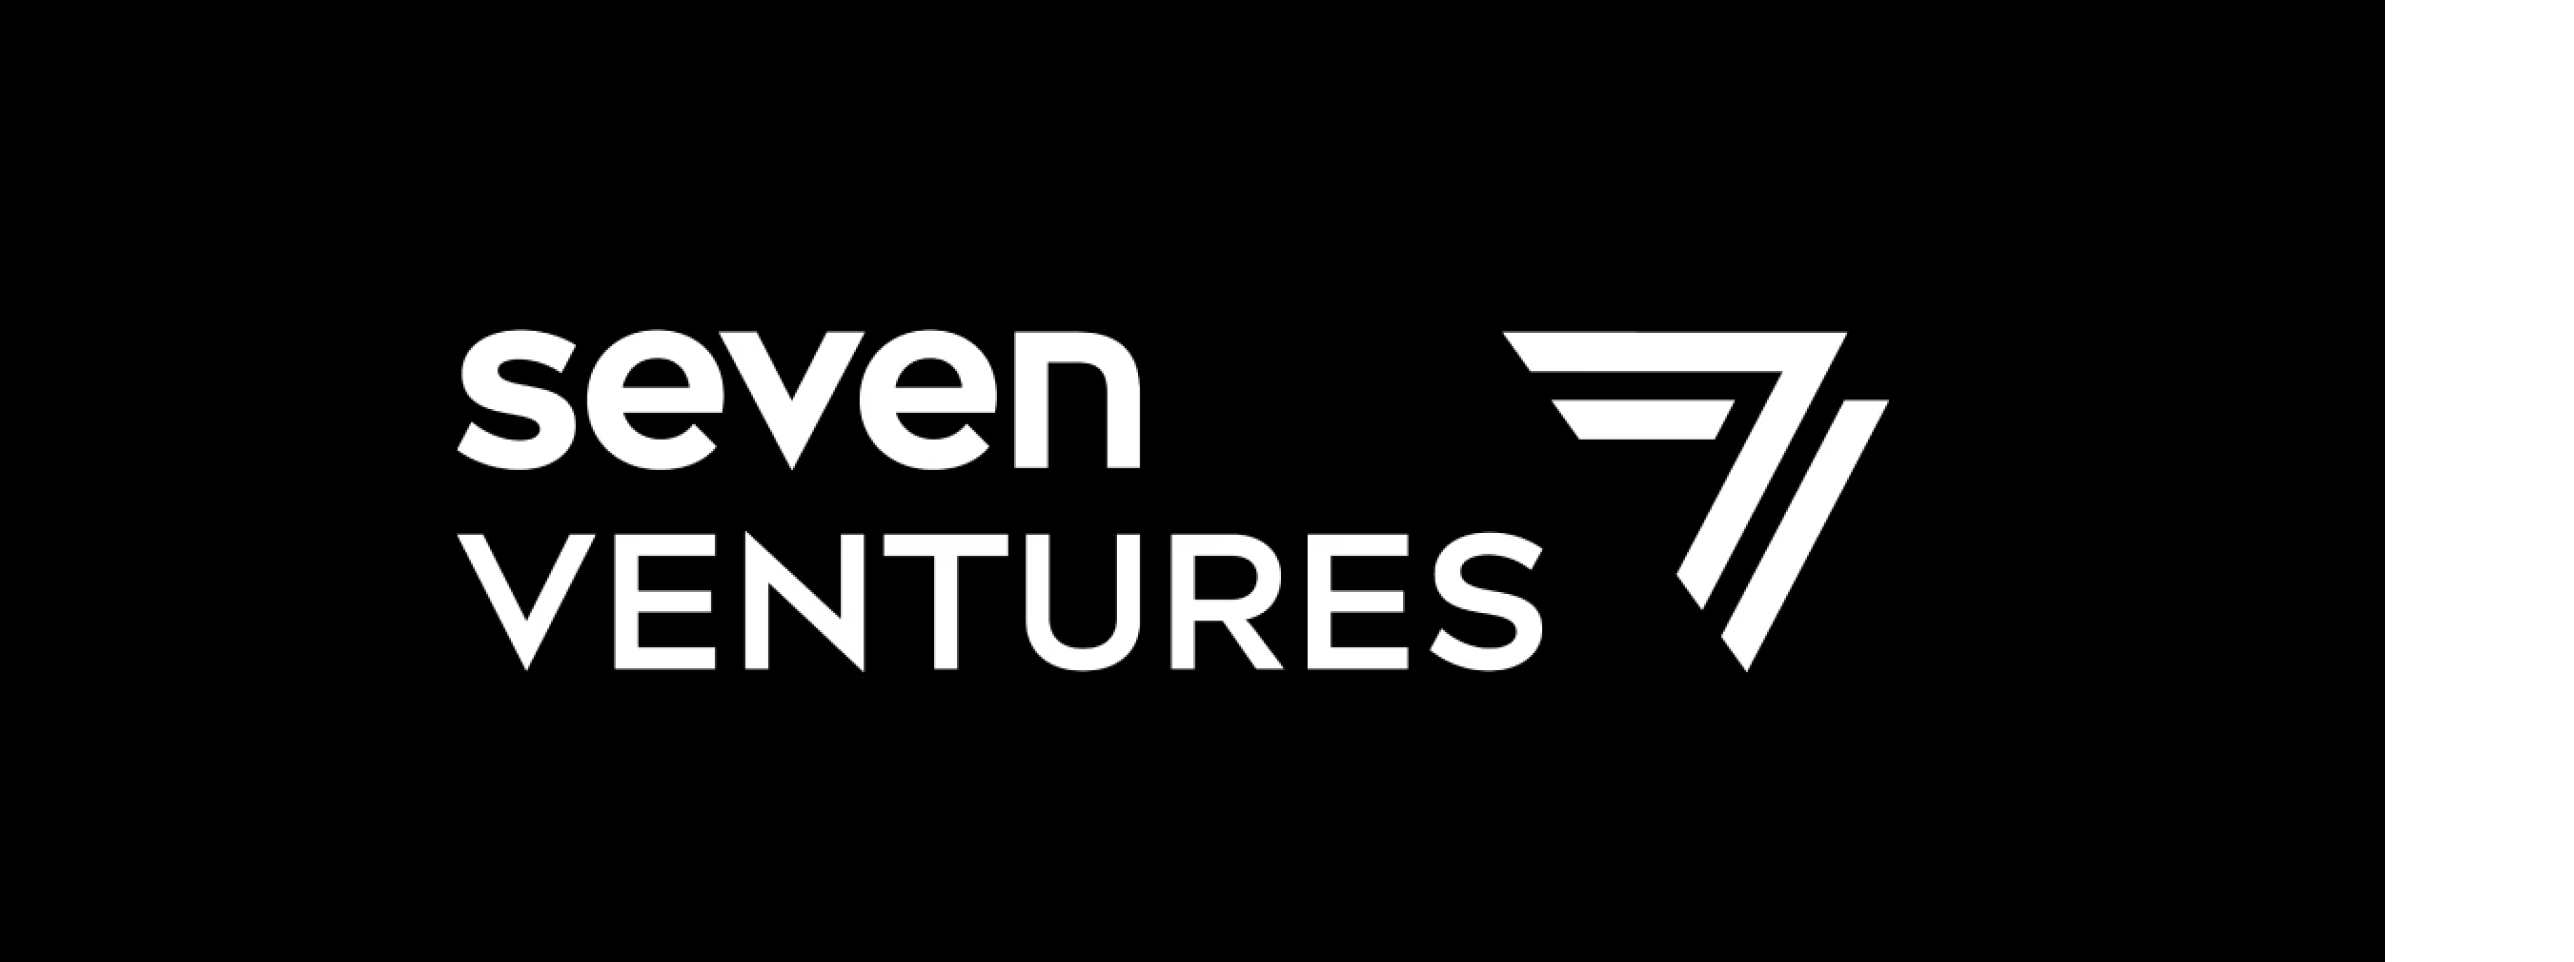 Event InvestorP Seven Venture